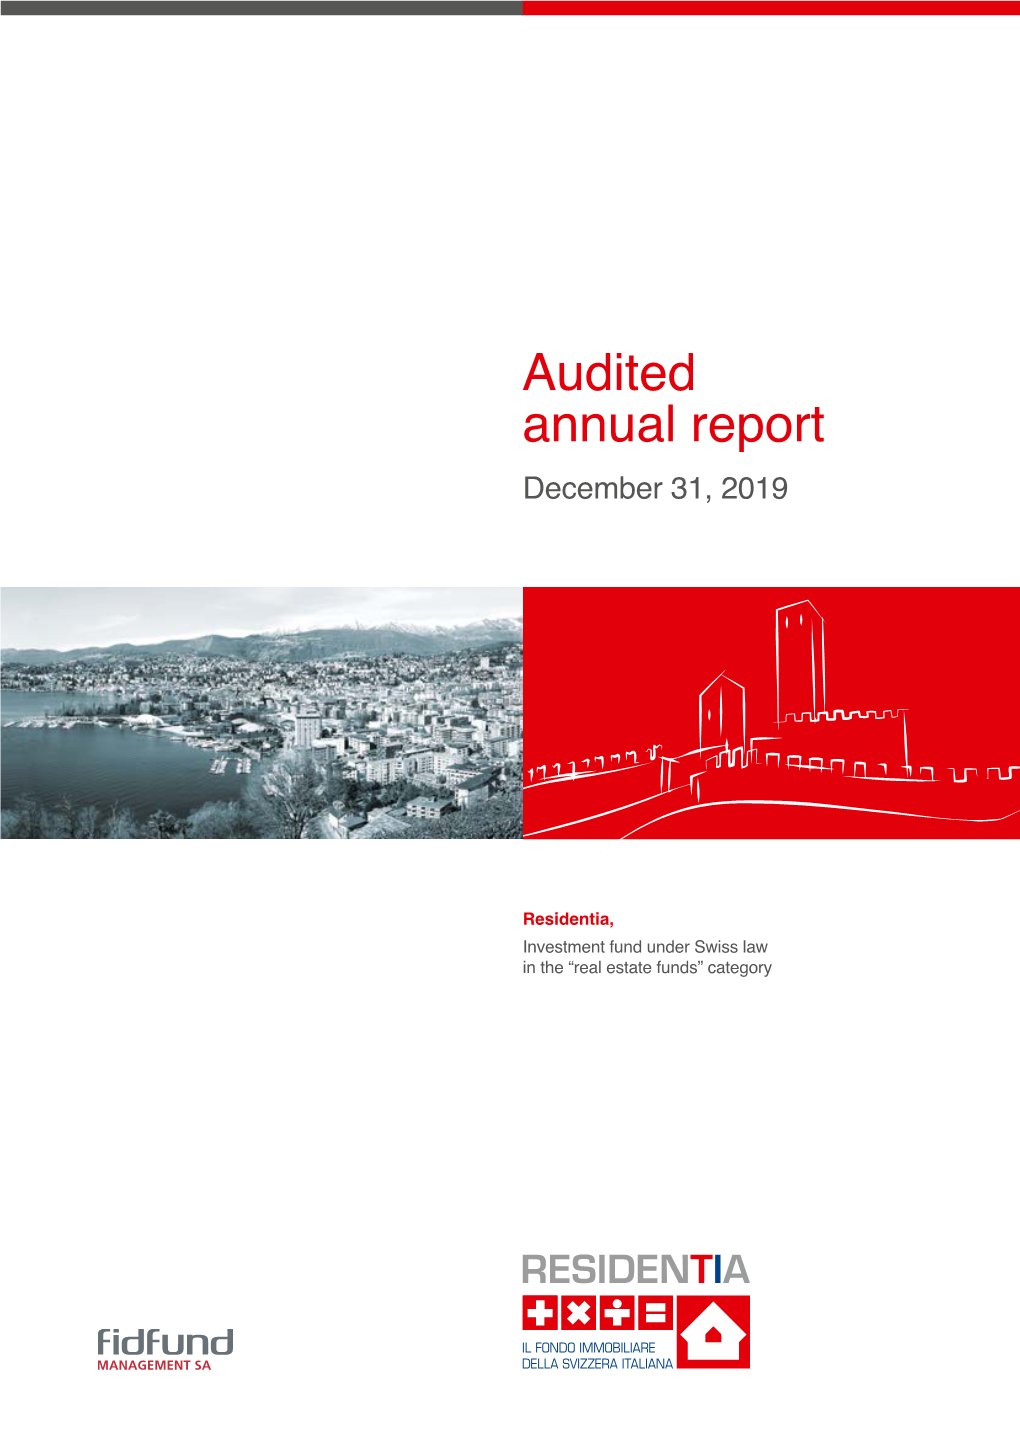 Audited Annual Report December 31, 2019